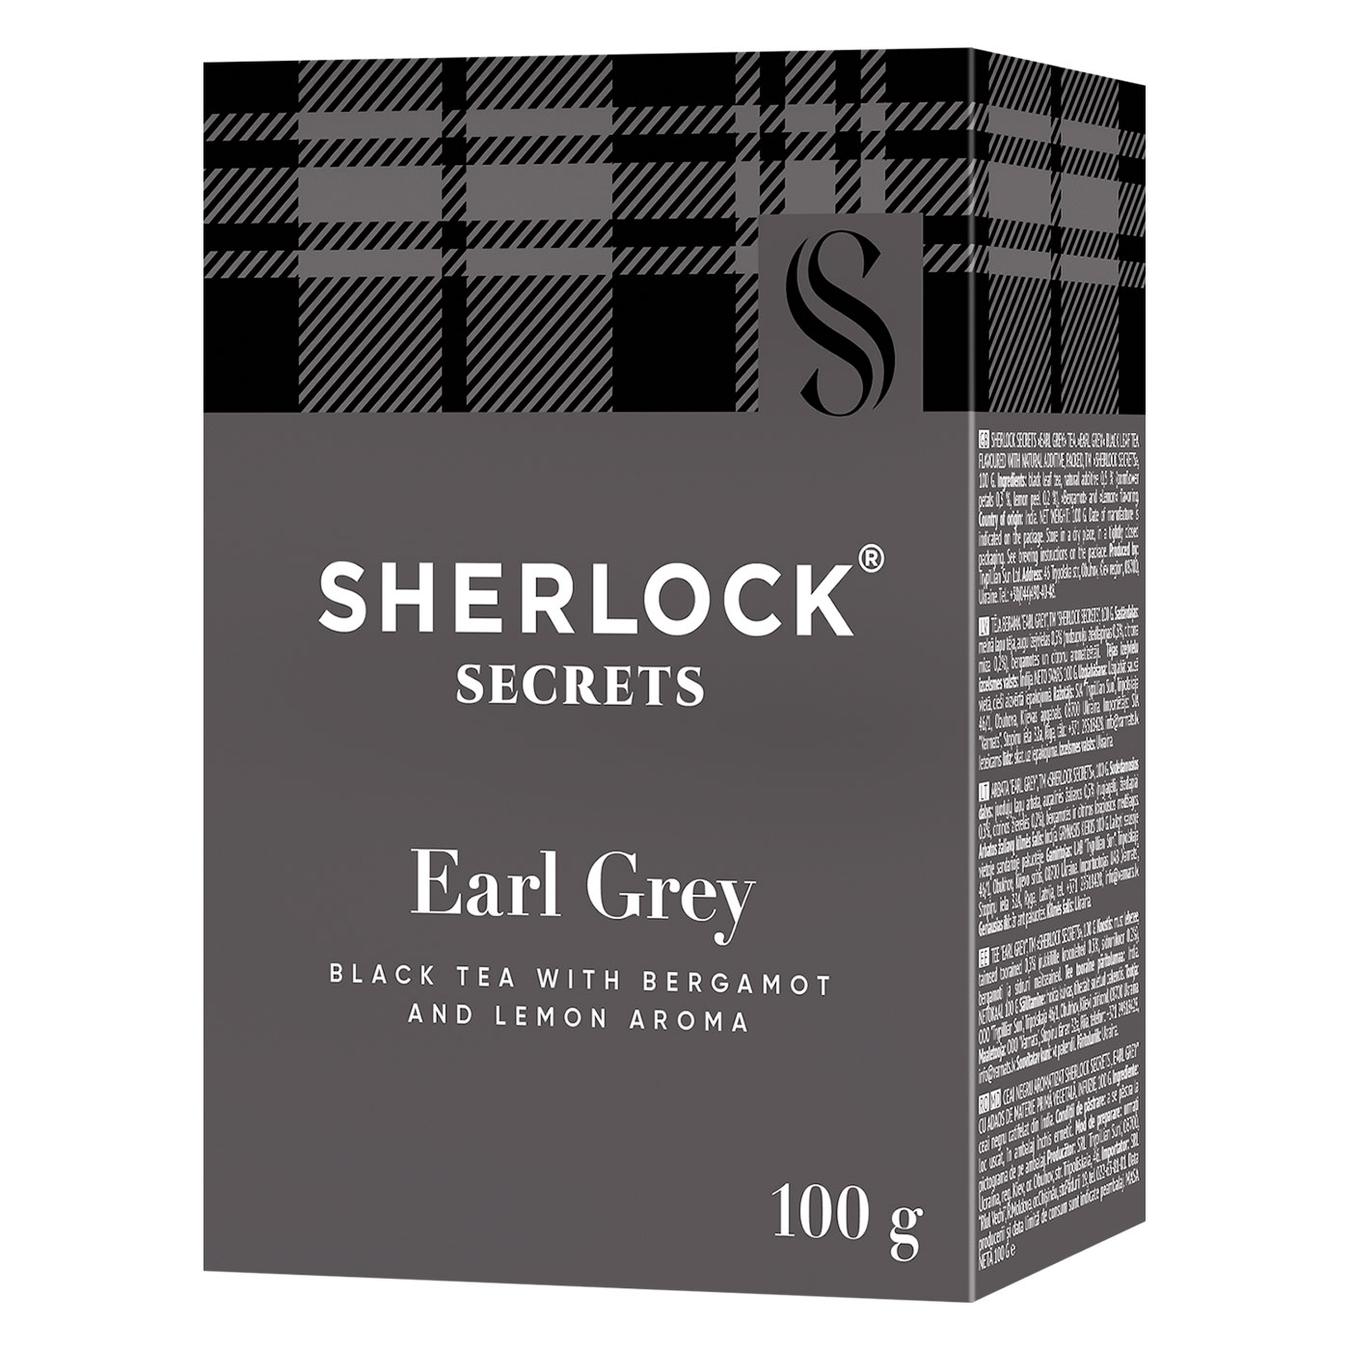 Sherlock Secrets Earl Gray black tea flavored loose leaf 100g